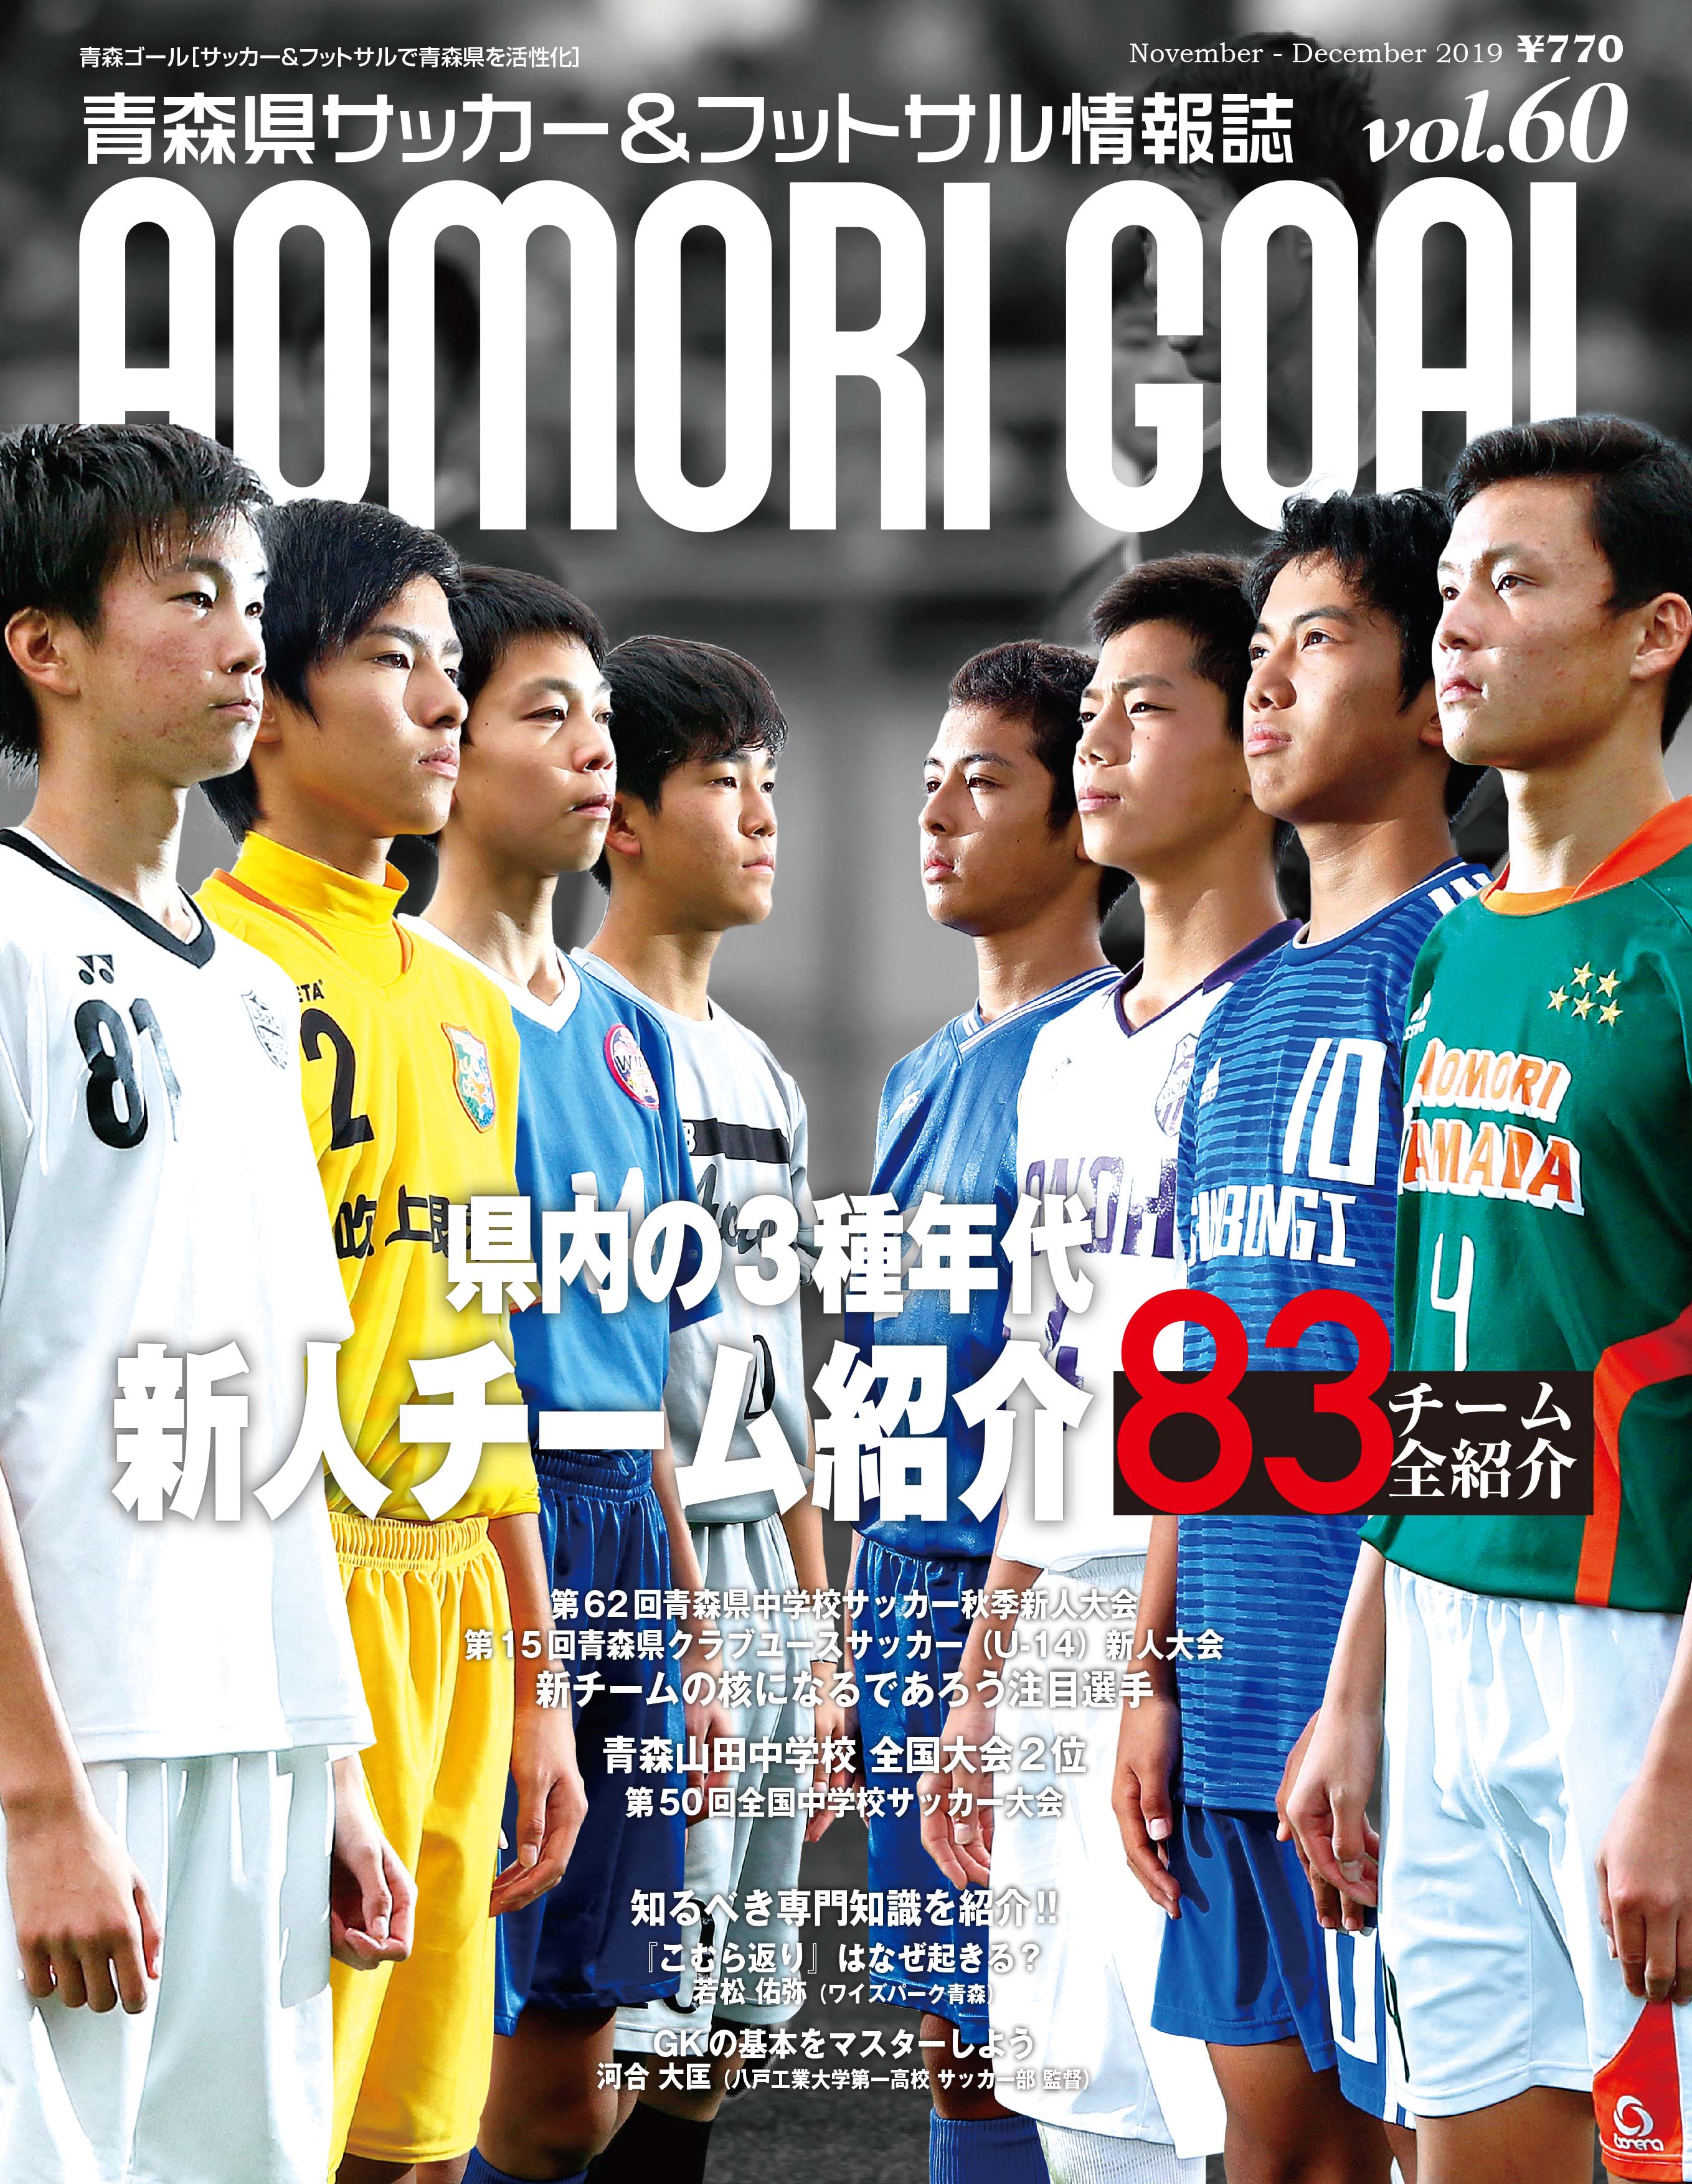 Aomori Goal Vol 60 バックナンバー 青森ゴール Aomori Goal 青森県サッカー フットサルマガジン